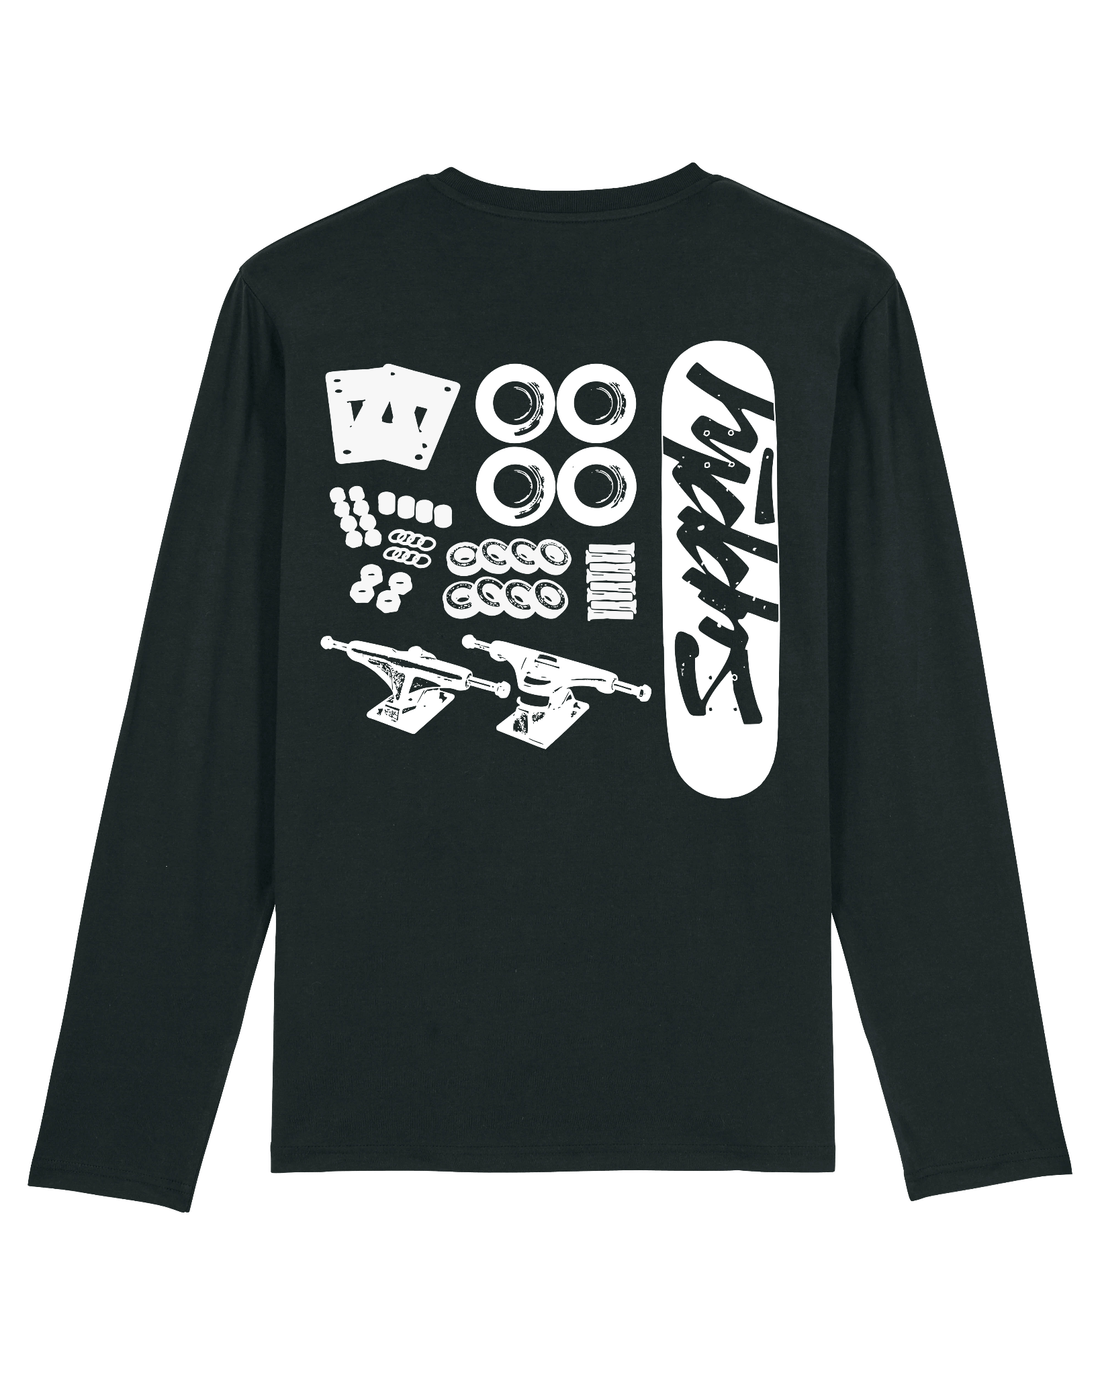 Black Skater Long Sleeve, Skate Parts Back Print